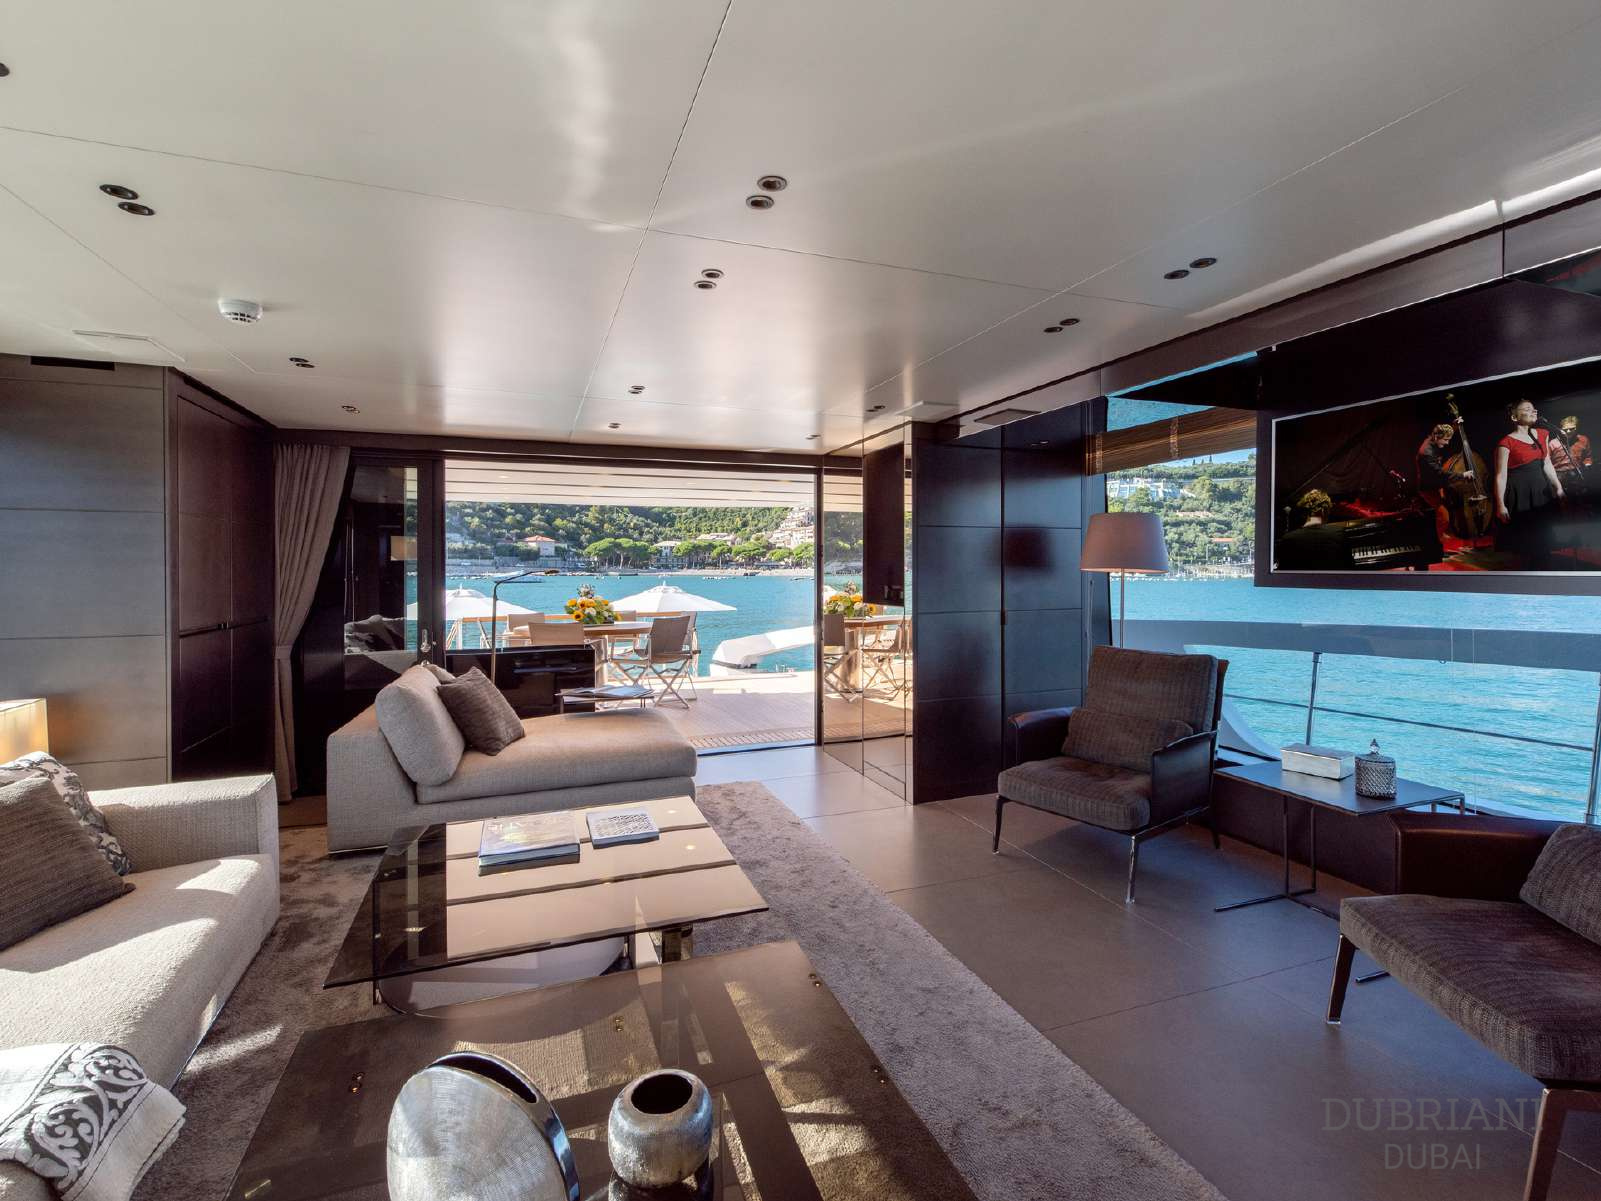 San Lorenzo SX88 yacht interior: Where luxury meets comfort.